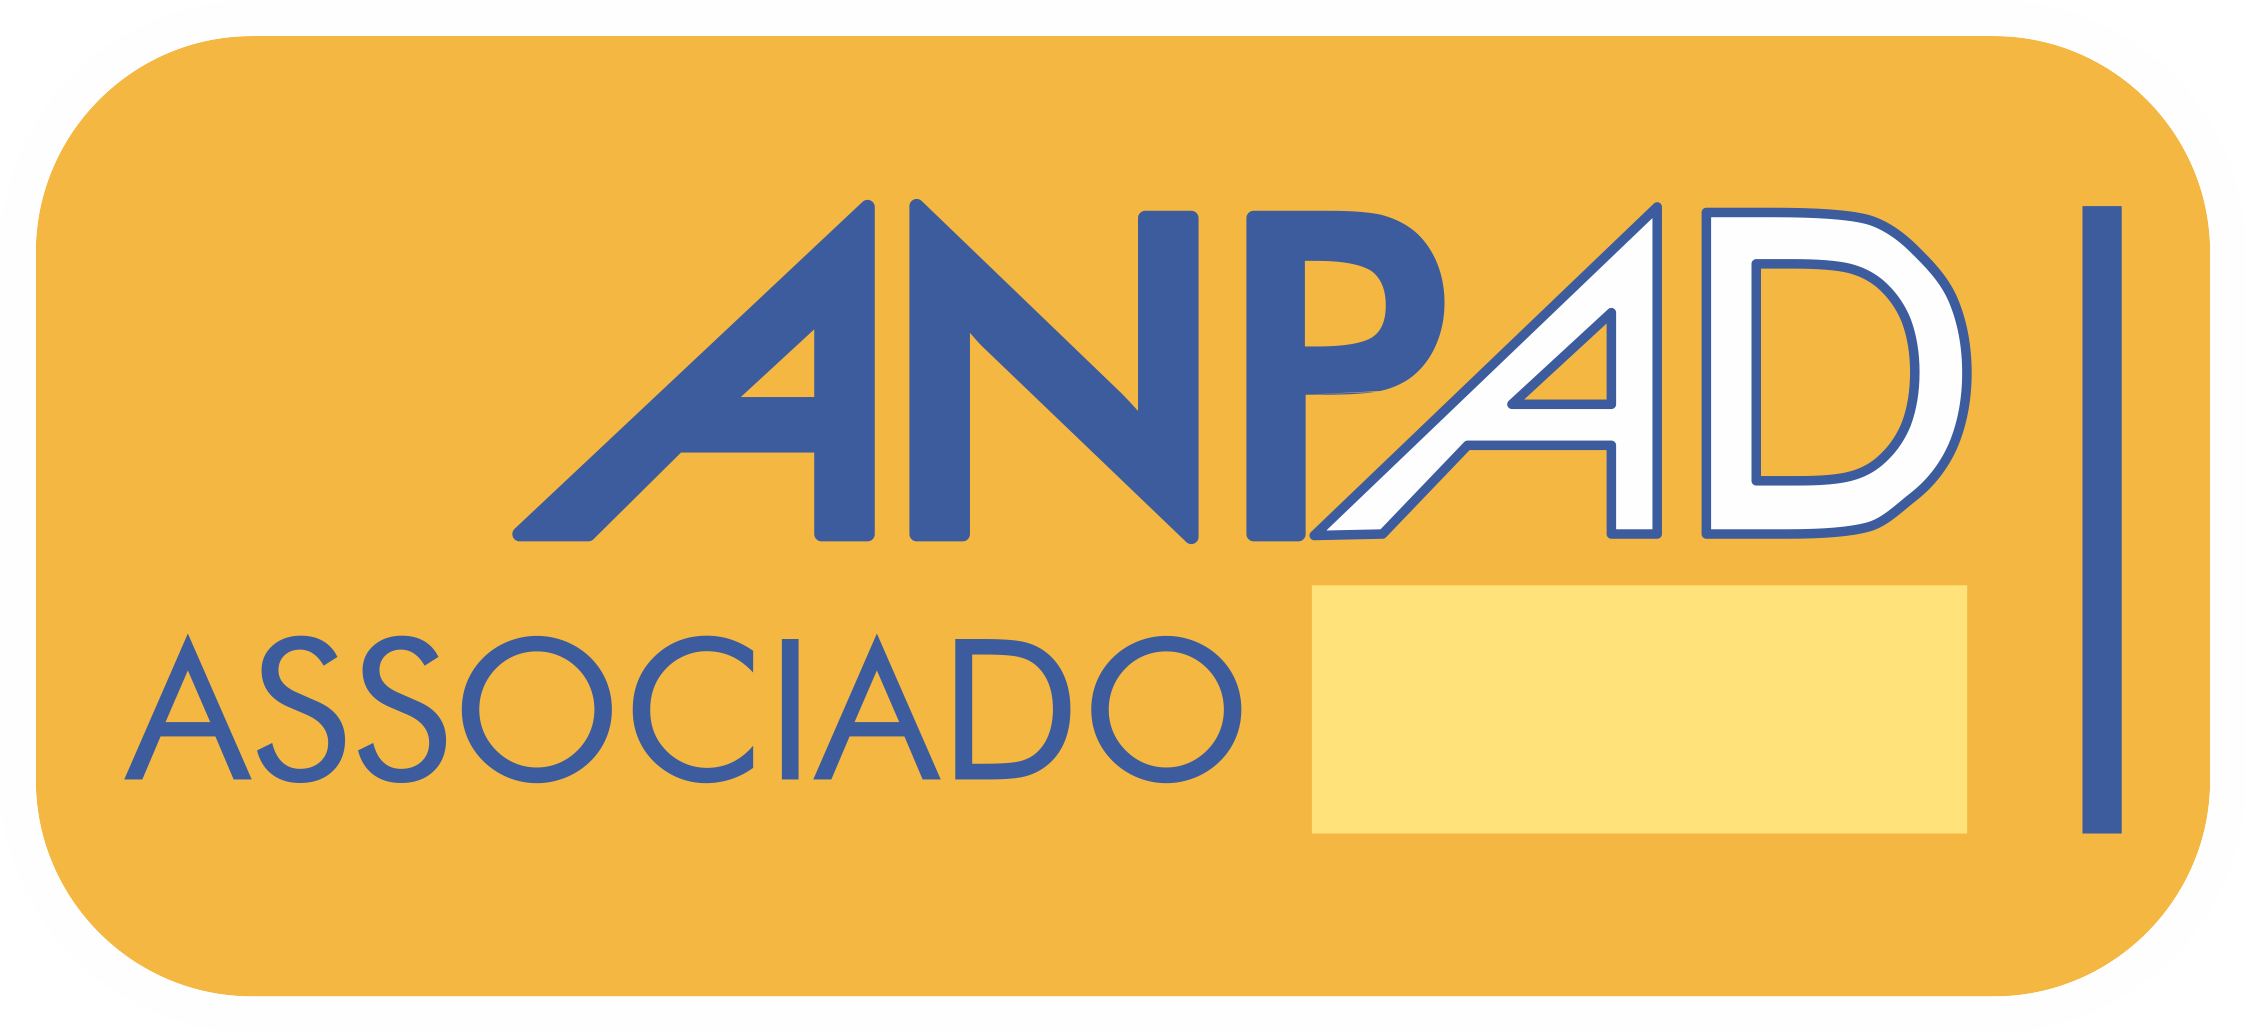 ANPAD [Associado] - v1.png